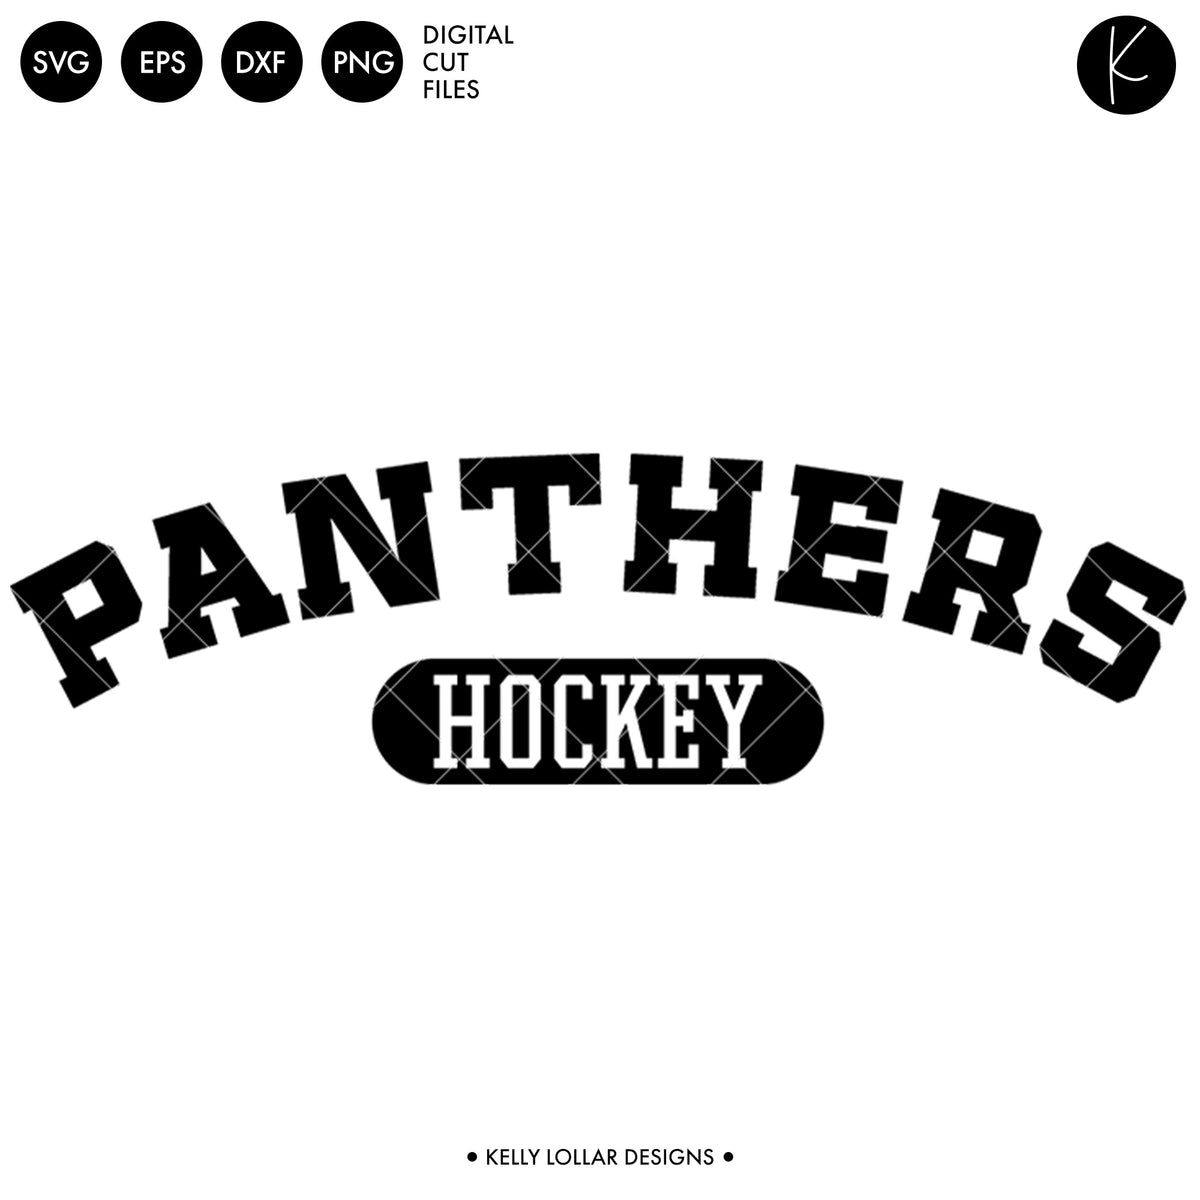 Panthers Hockey Bundle | SVG DXF EPS PNG Cut Files